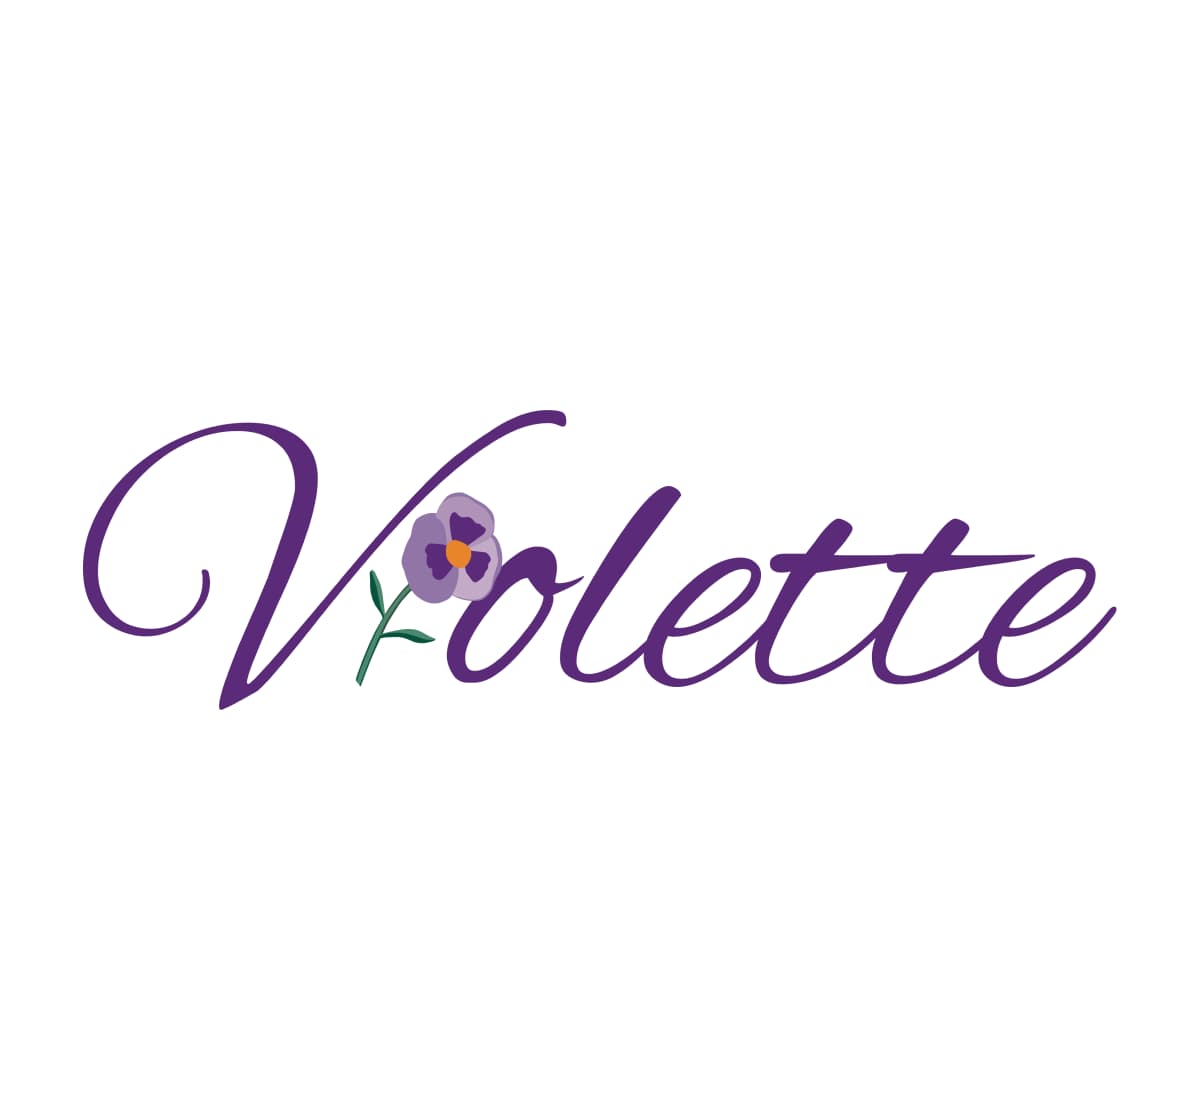 Violet dog bandana